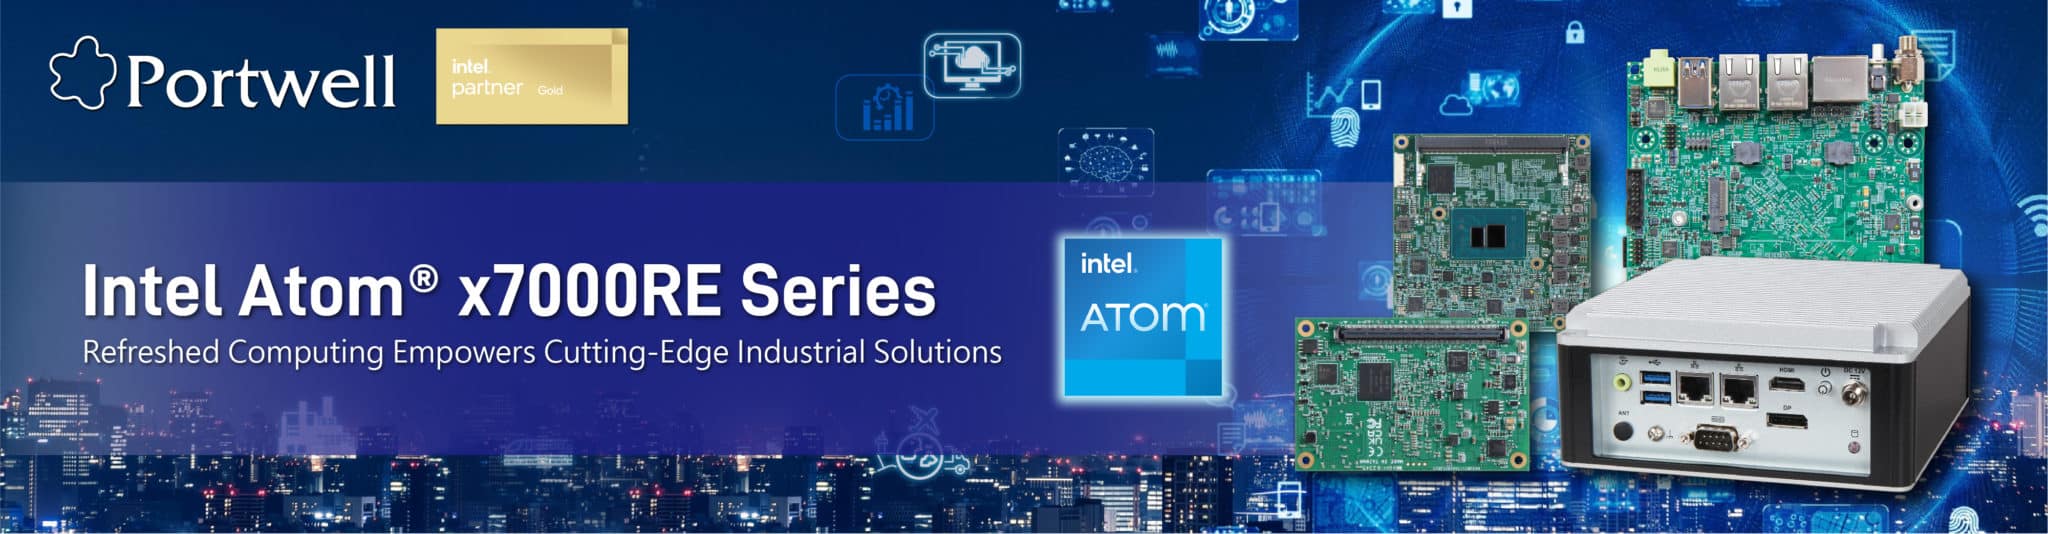 Intel Atom x7000RE Series  Banner